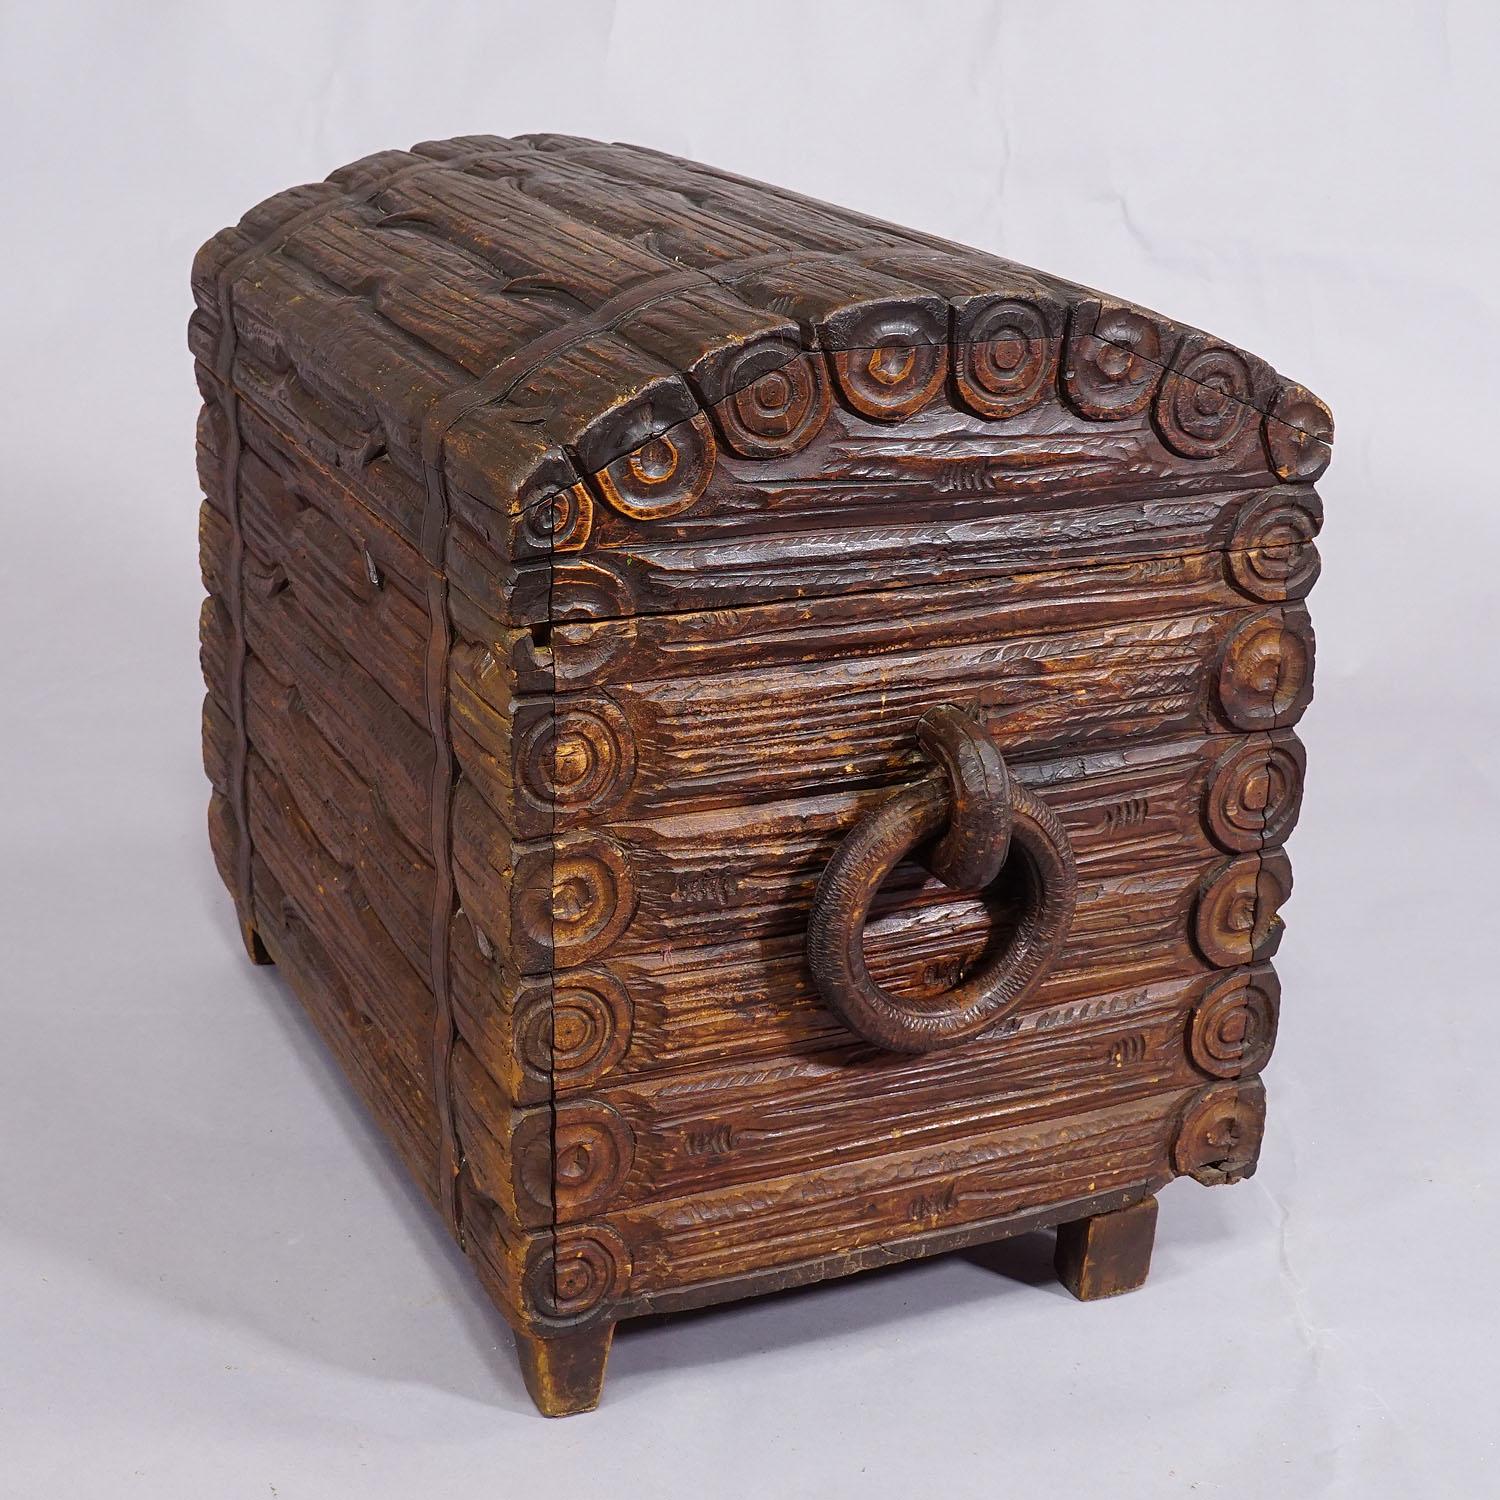 German Wooden Carved Black Forest Log Box Modelled as Piled Stack of Logs For Sale